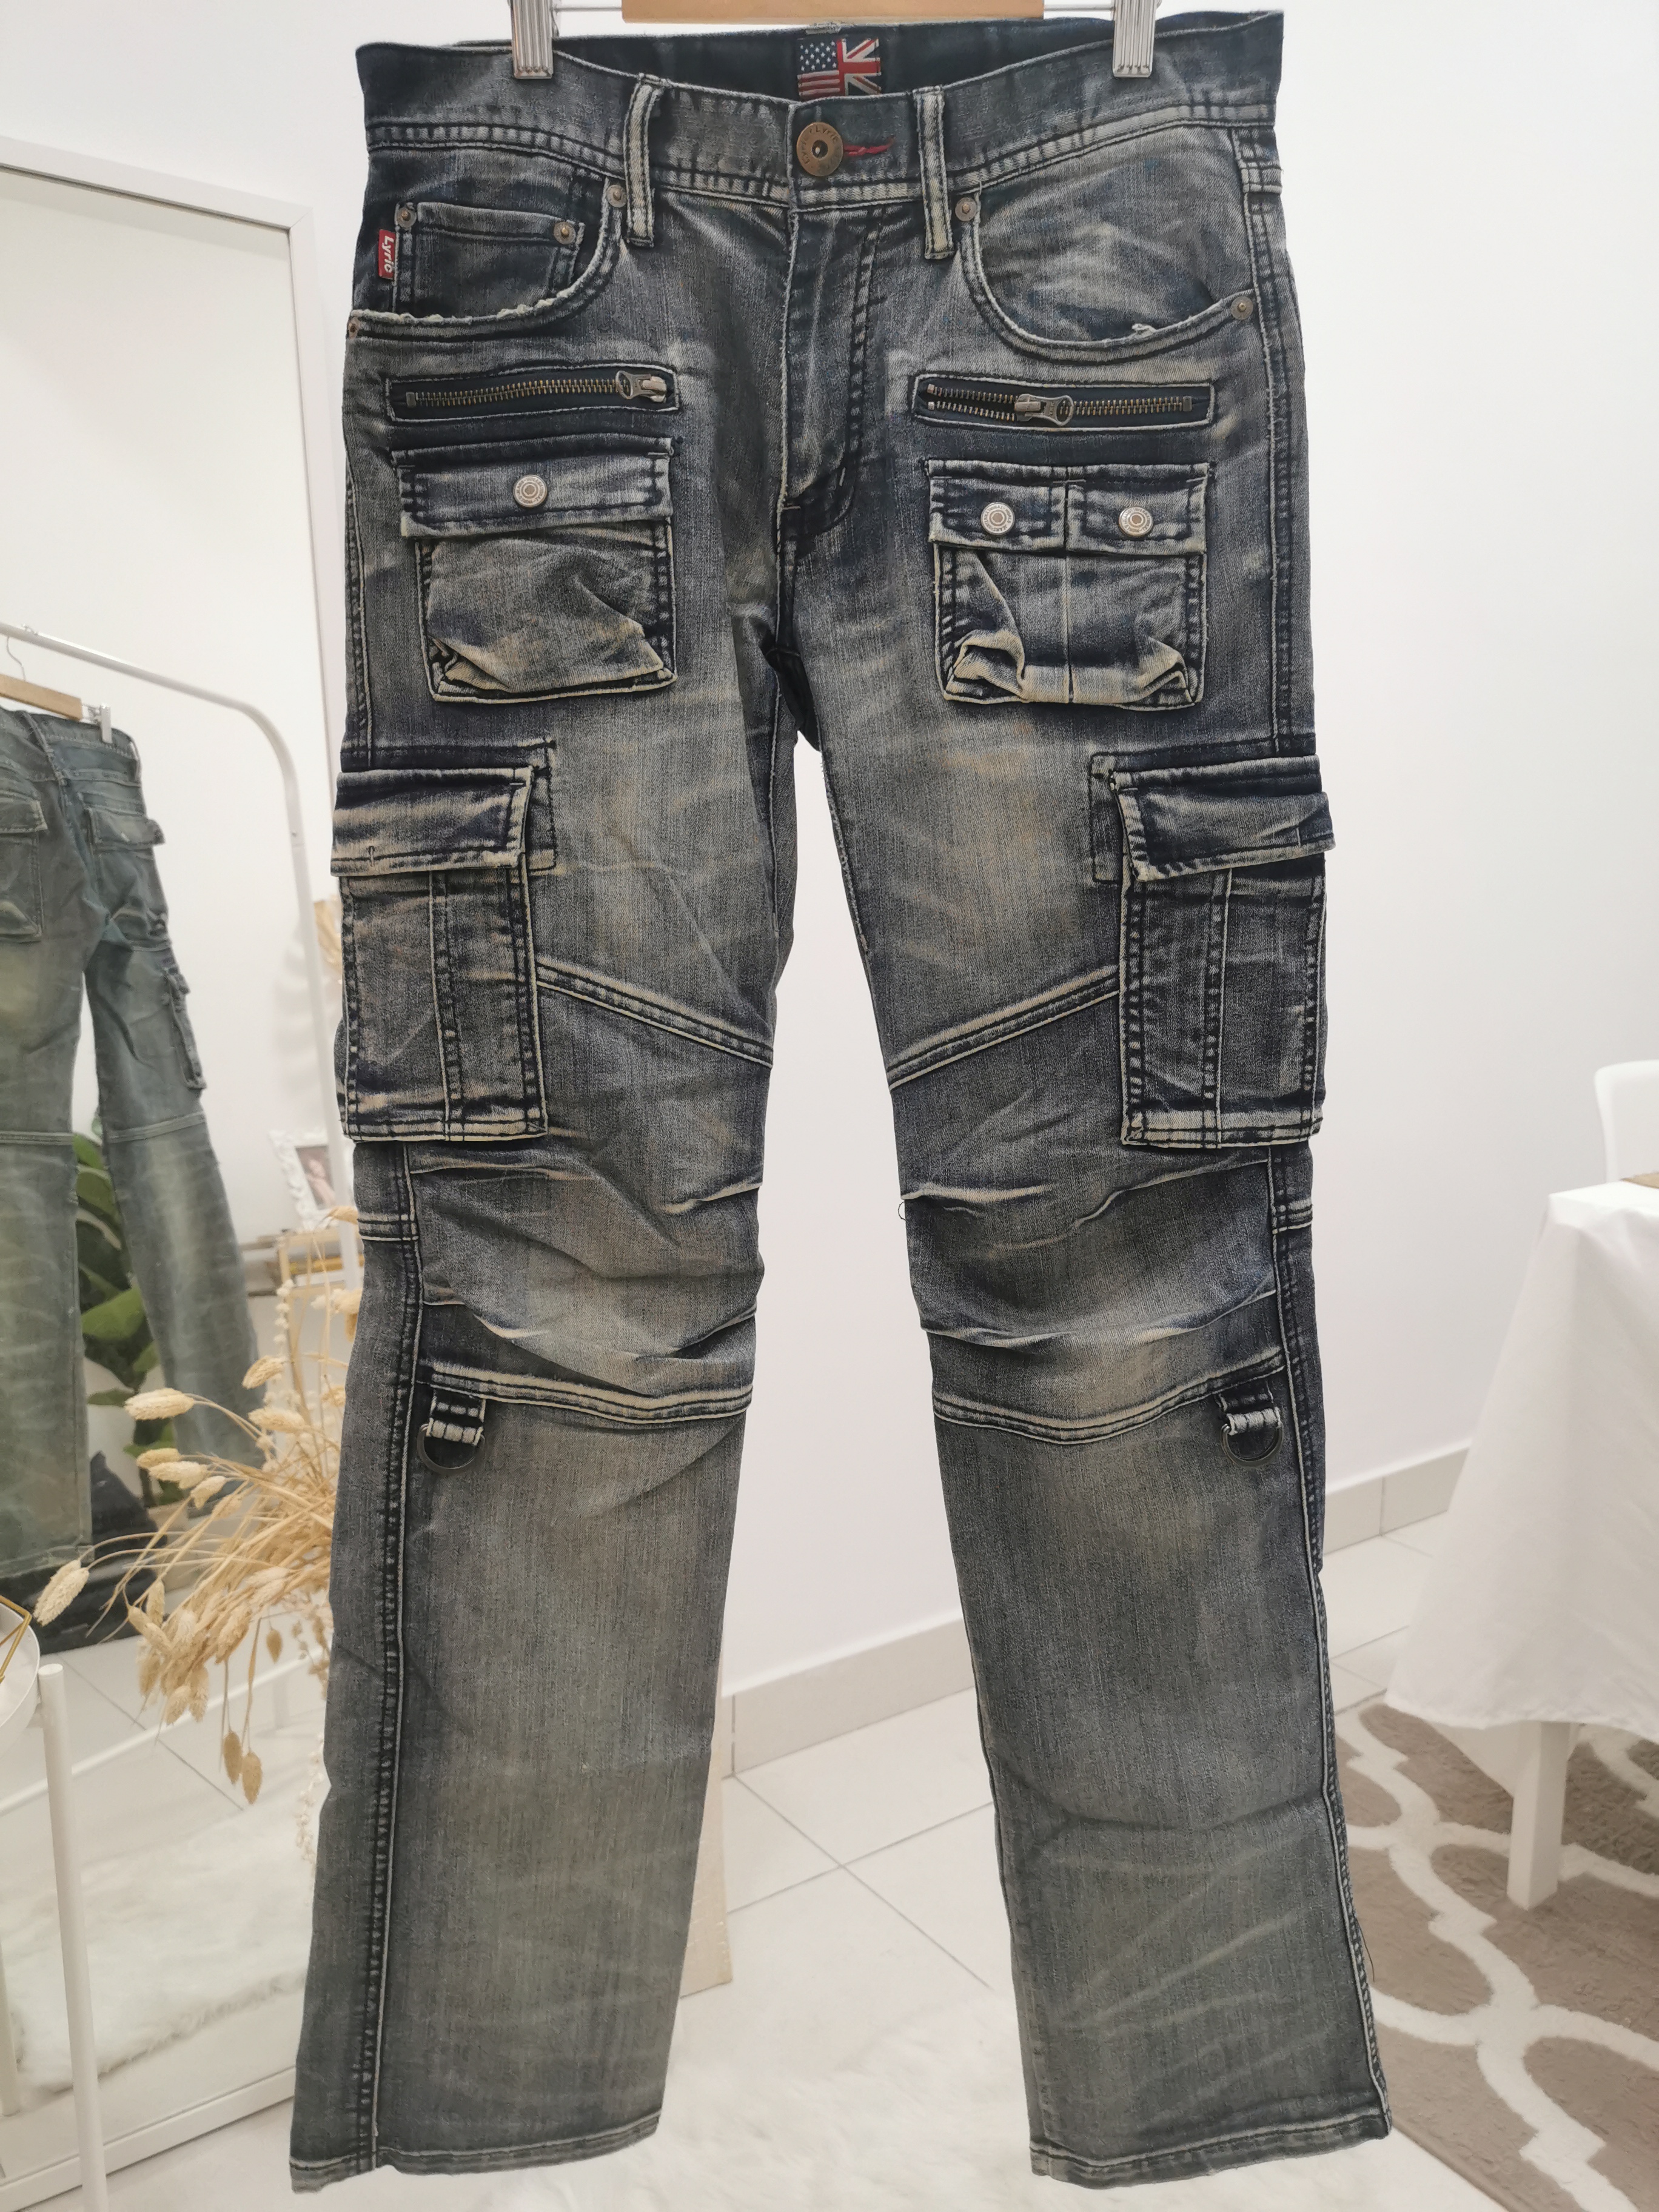 Other Designers Rare - Rare Lyric Biker Jeans Punk Design Jeans, thriftinlux